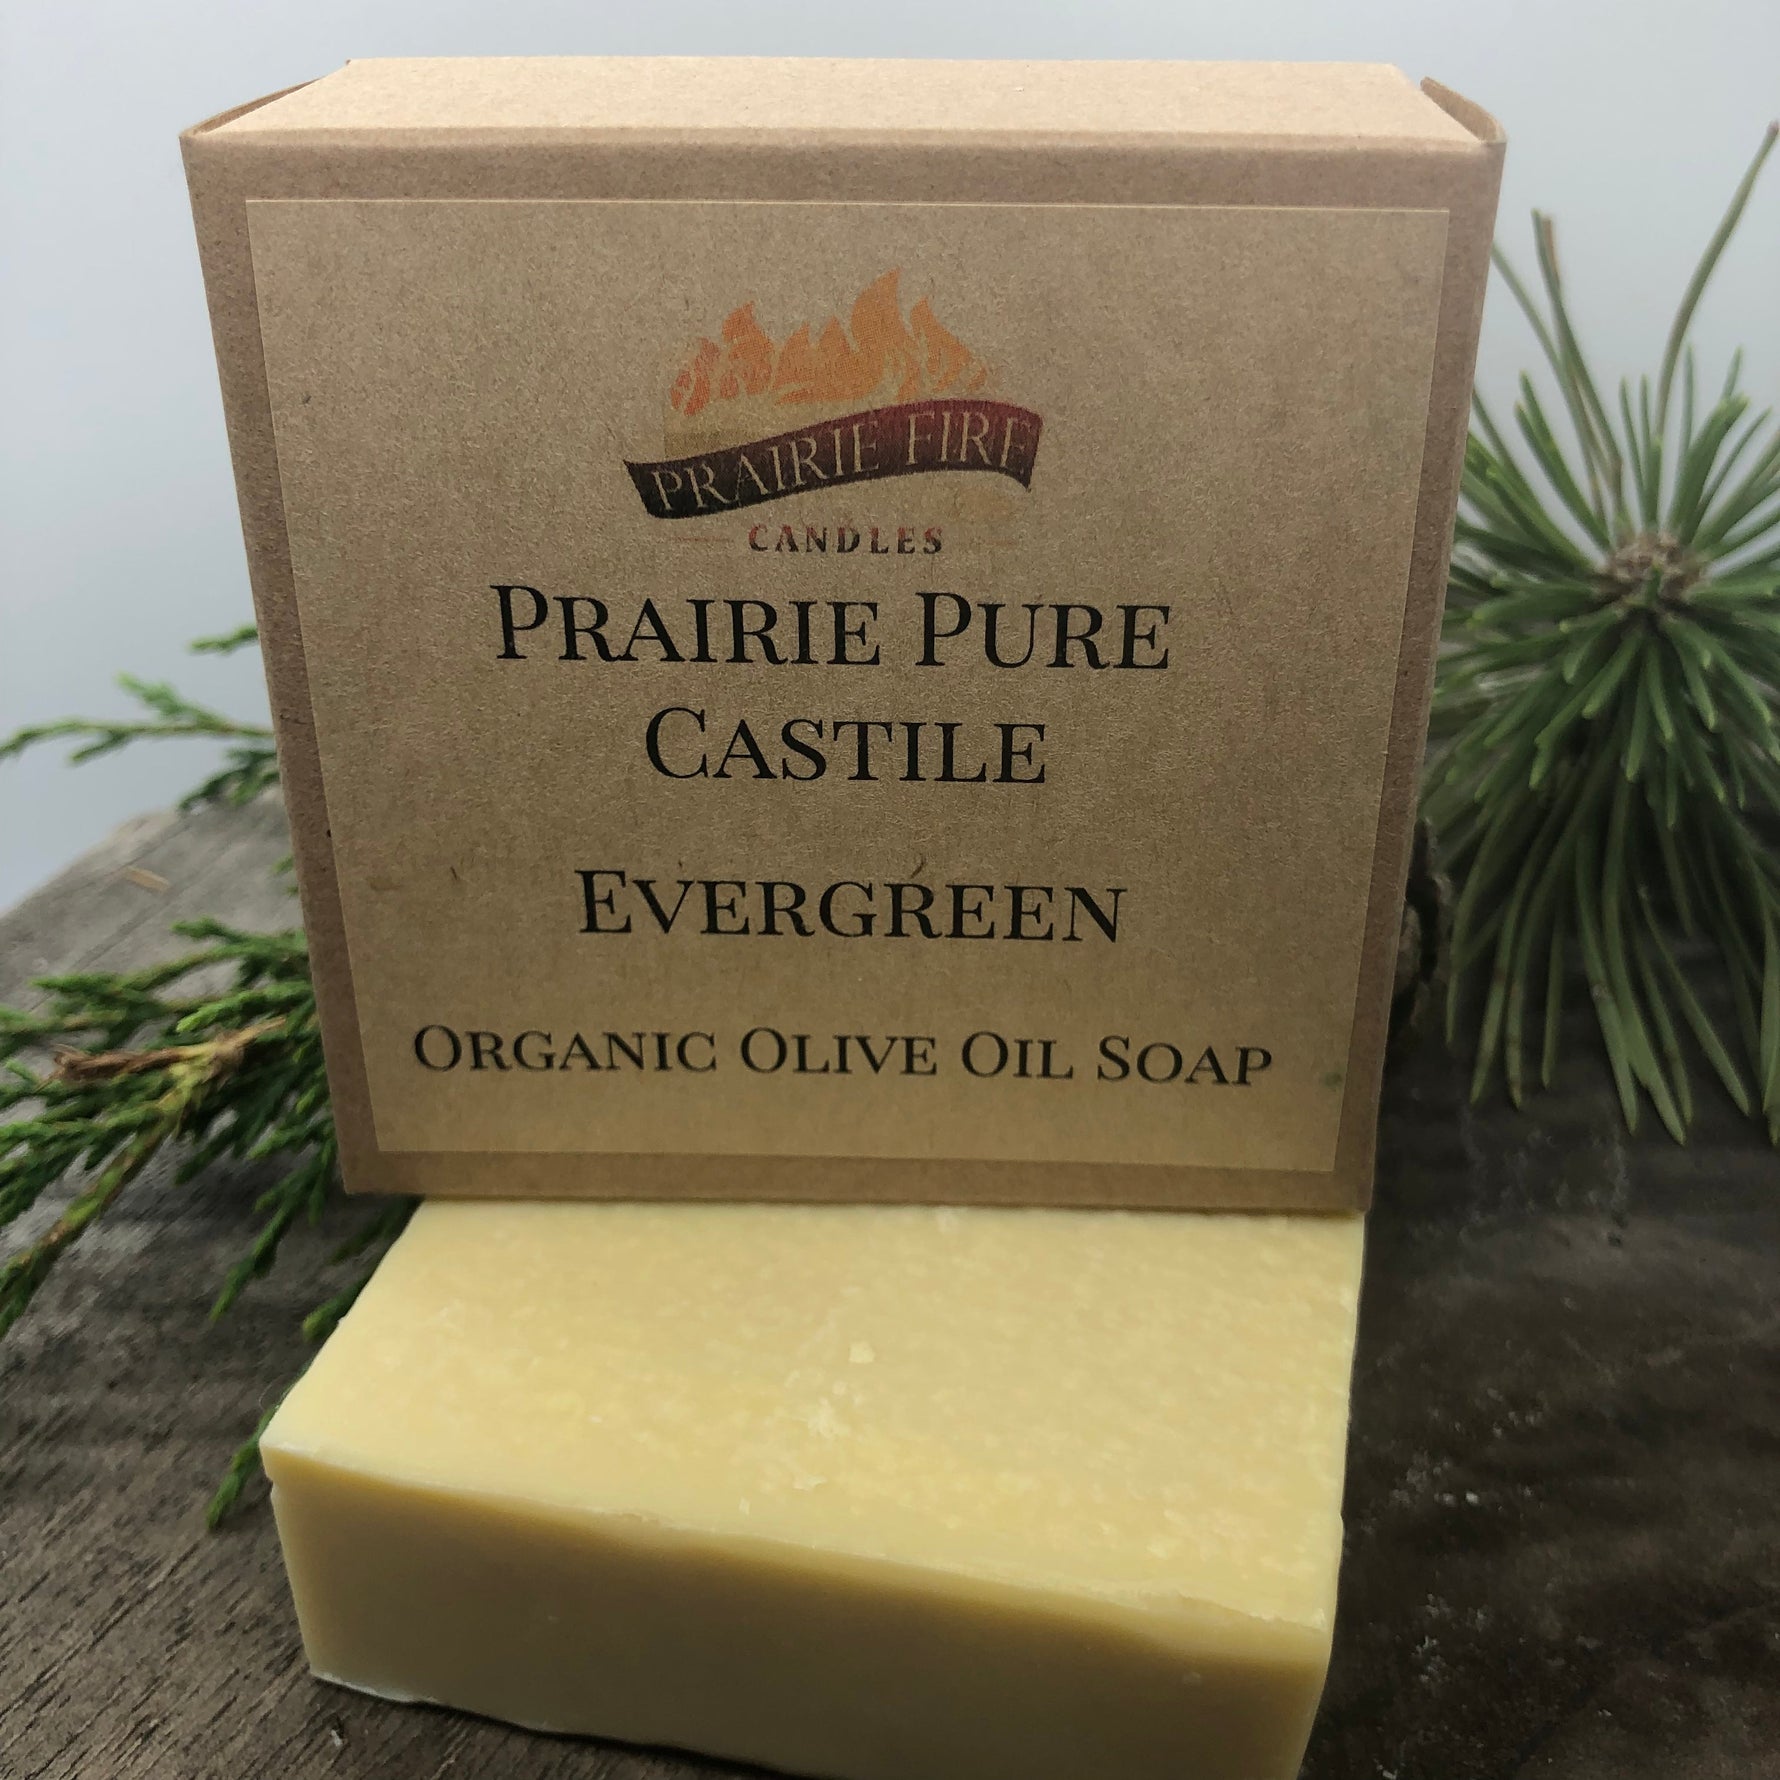 Evergreen Real Castile Organic Olive Oil Soap for Sensitive Skin - Dye Free - 100% Certified Organic Extra Virgin Olive Oil-0